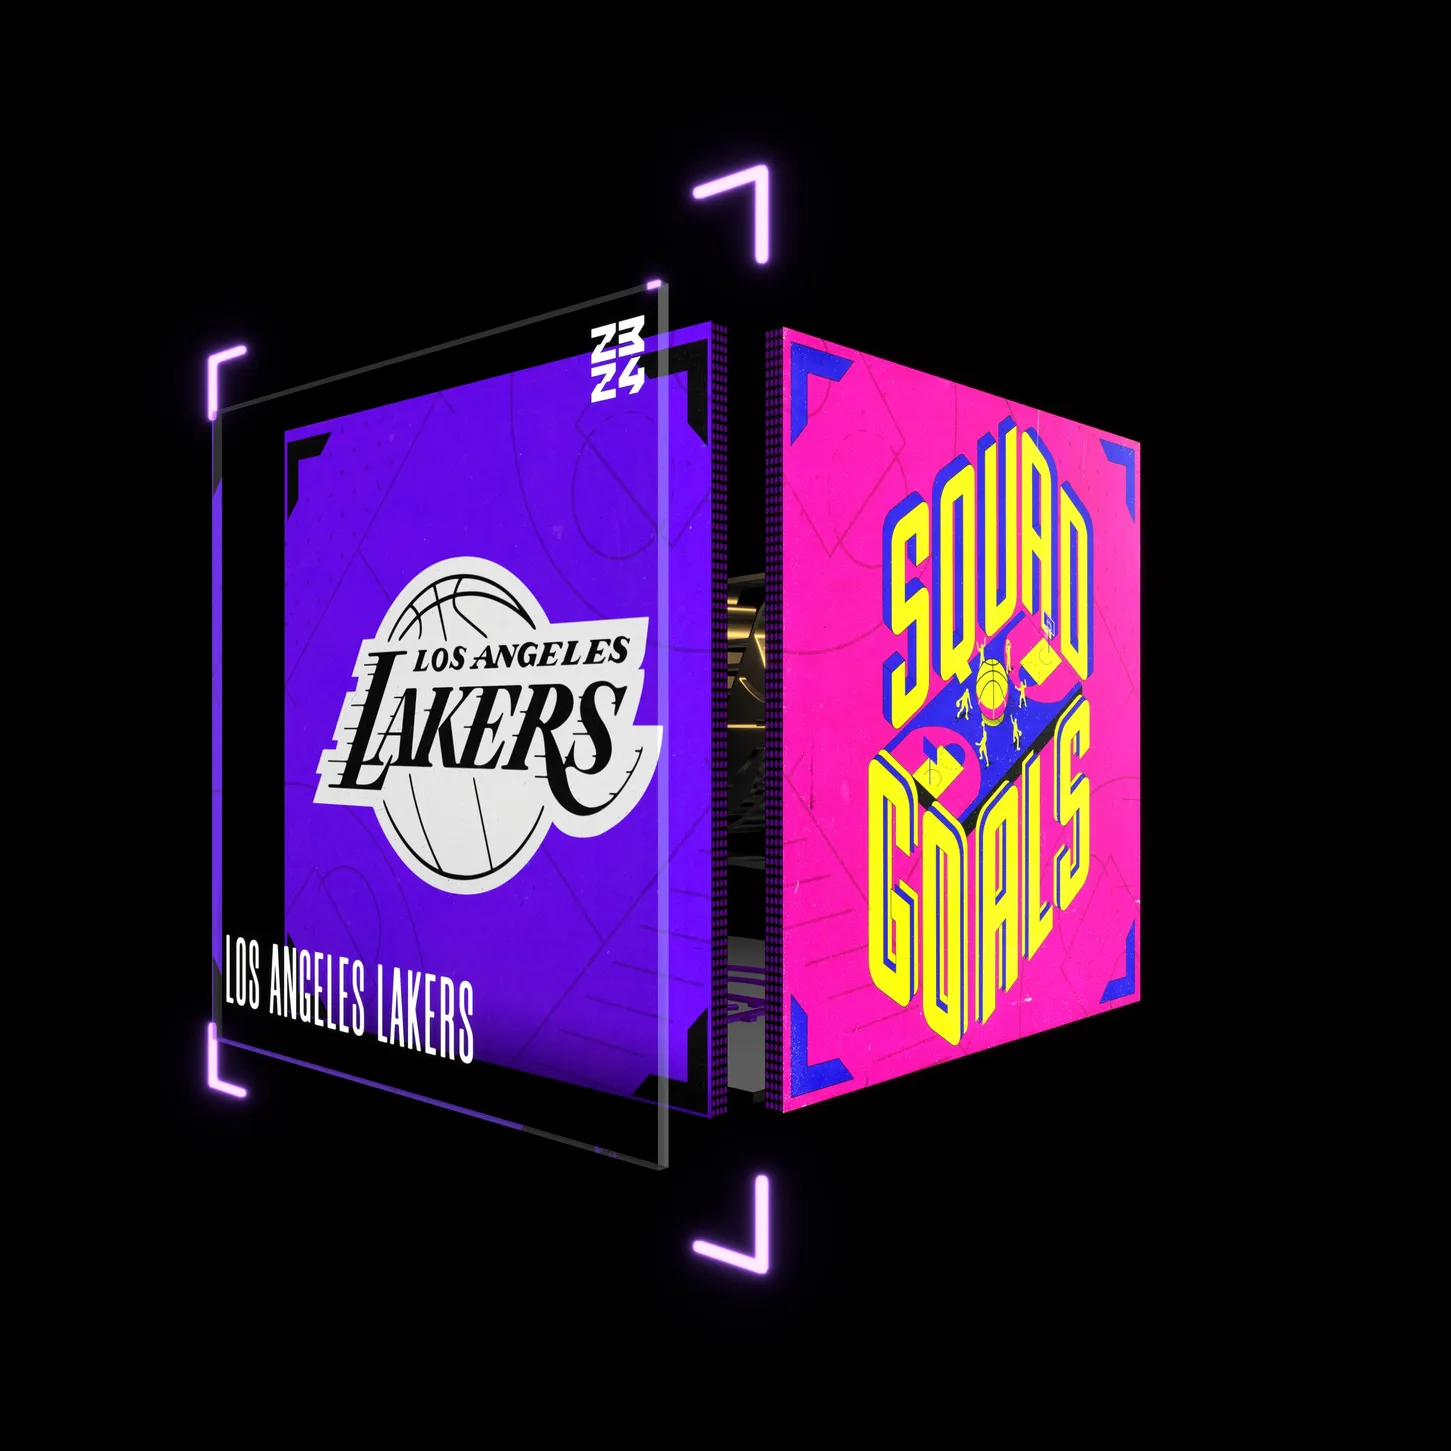 Los Angeles Lakers asset